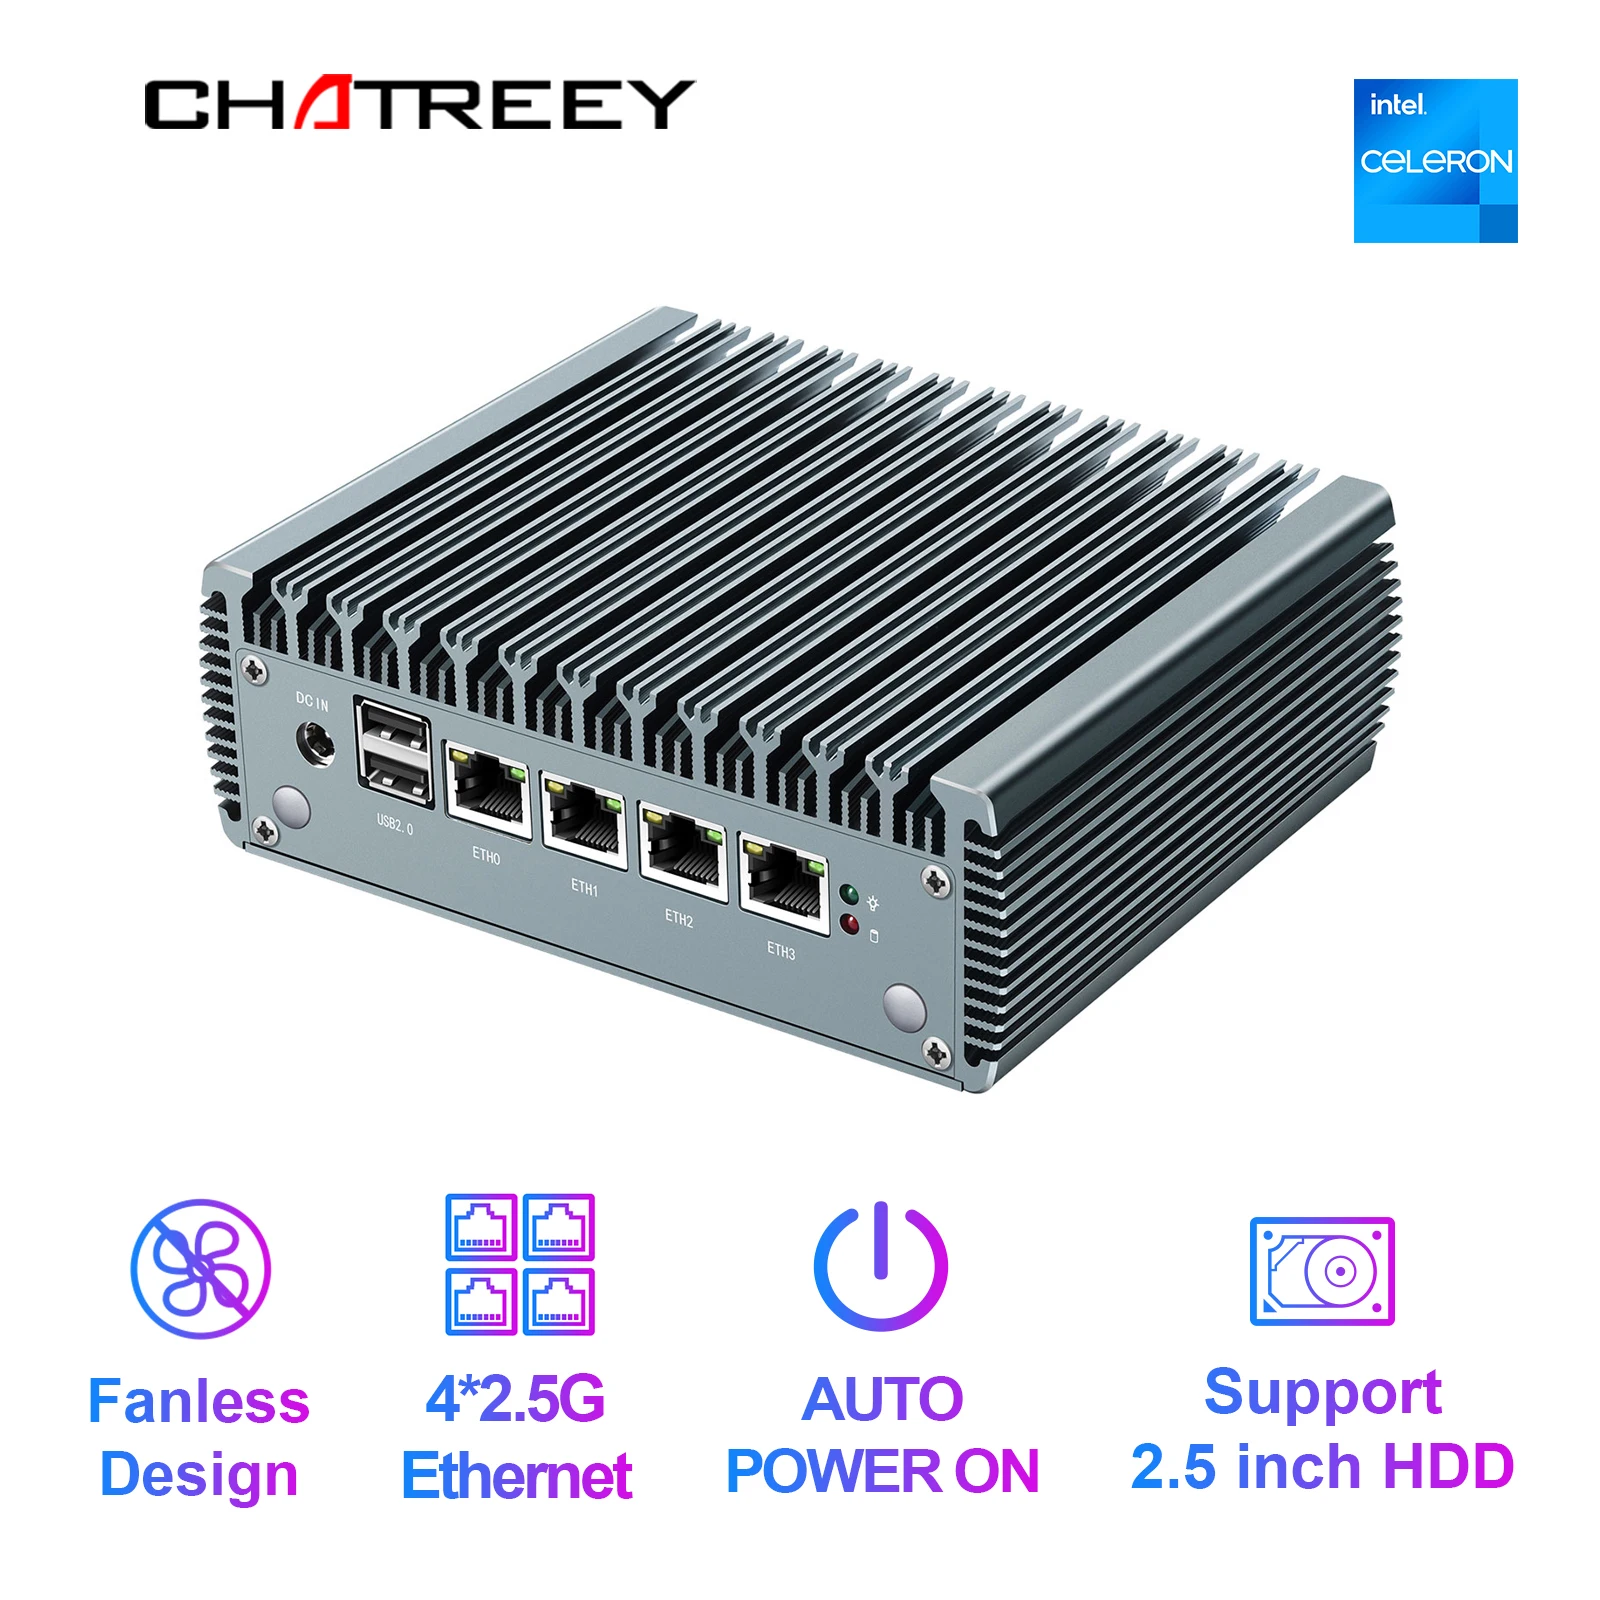 Chatreey 2.5G pfSense Firewall intel Pentium N4000 4*Intel i225 Nics Soft Router DDR4 Fanless Mini PC OPNsense VPN Server